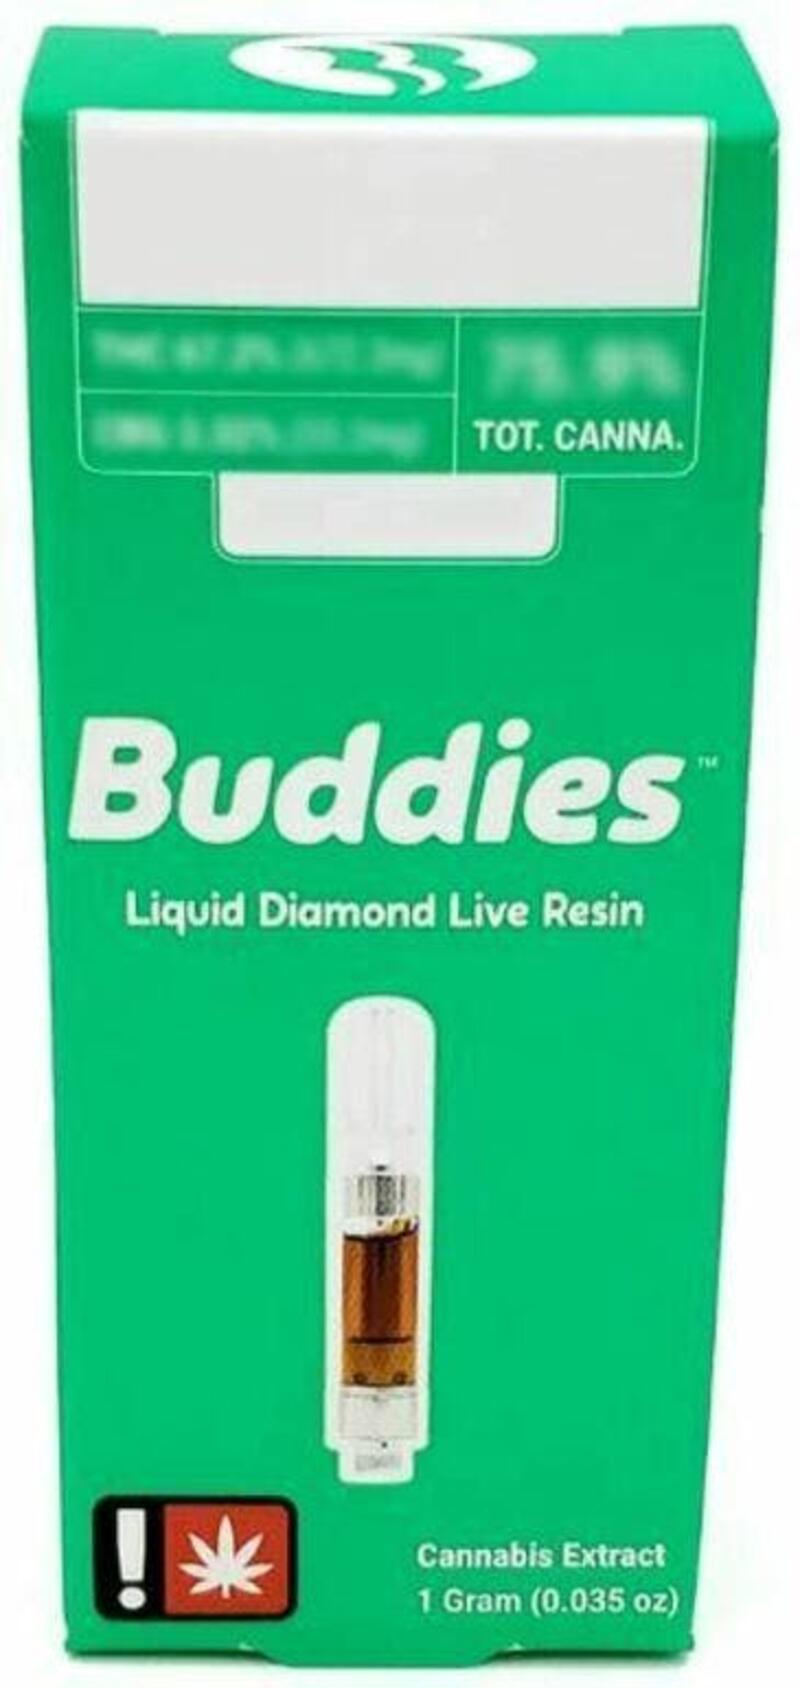 Buddies Liquid Diamonds Live Resin Cart 1g (S) Super Jack